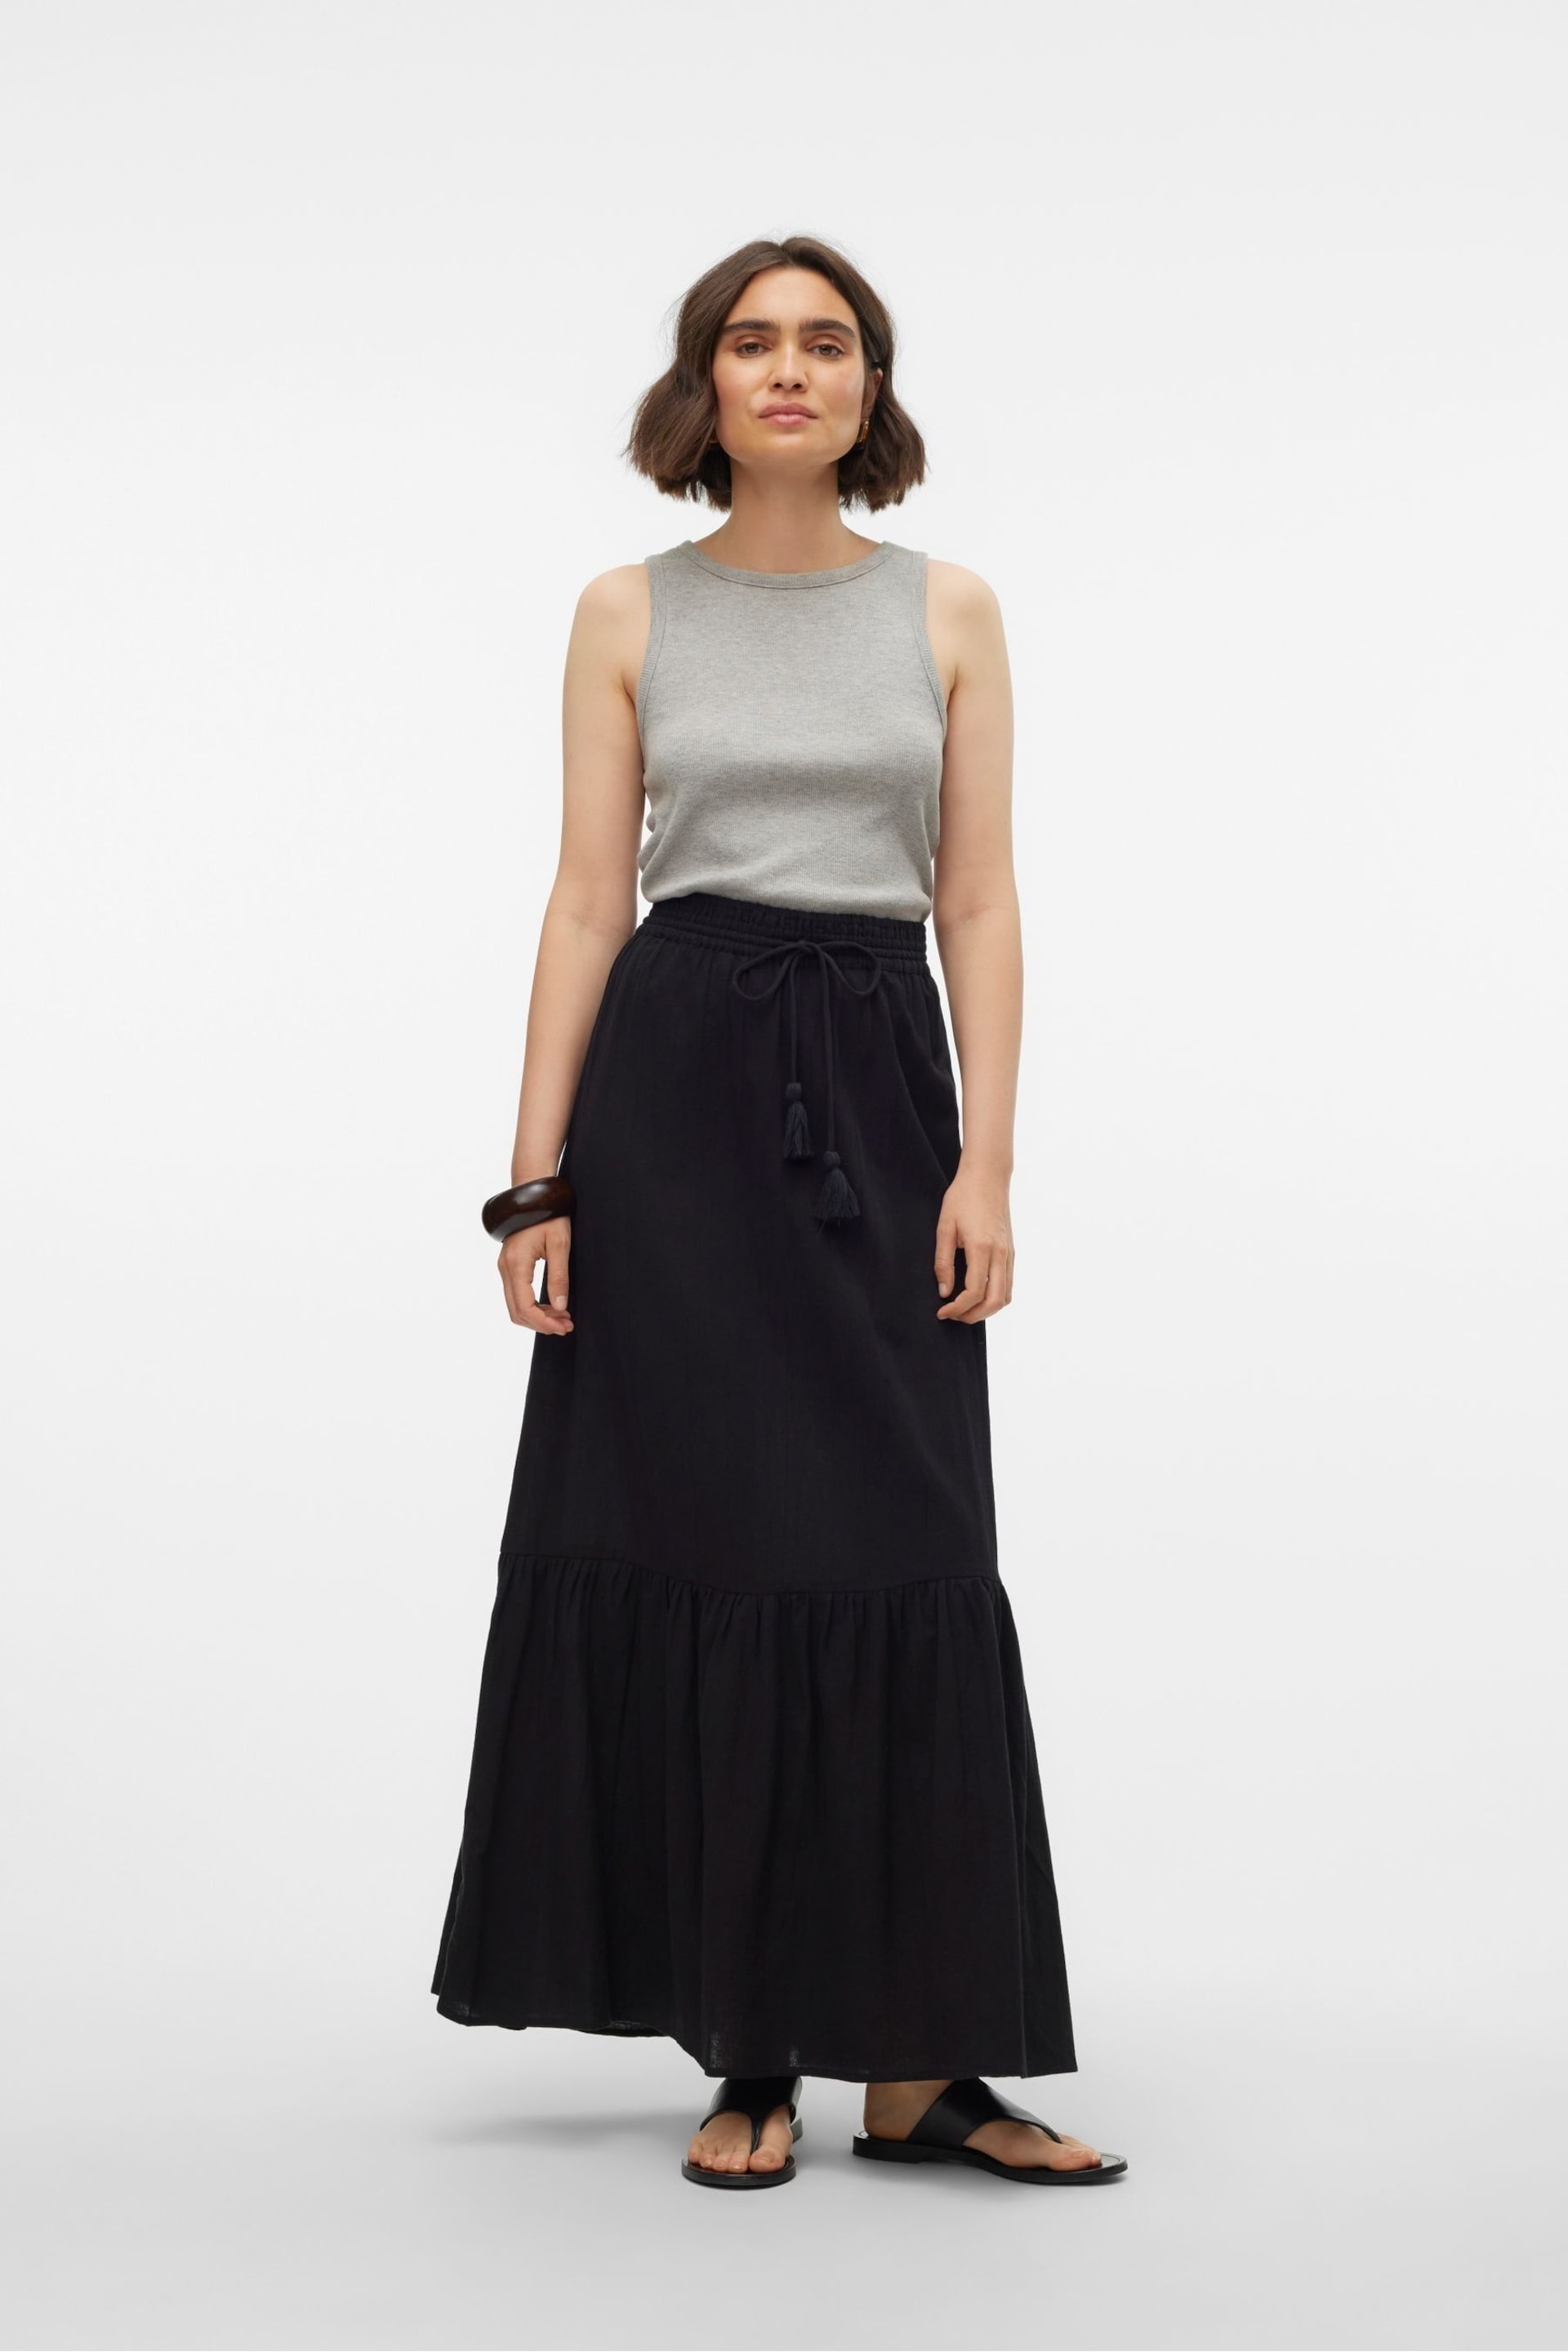 VERO MODA Black Tiered Summer Maxi Skirt - Image 5 of 6